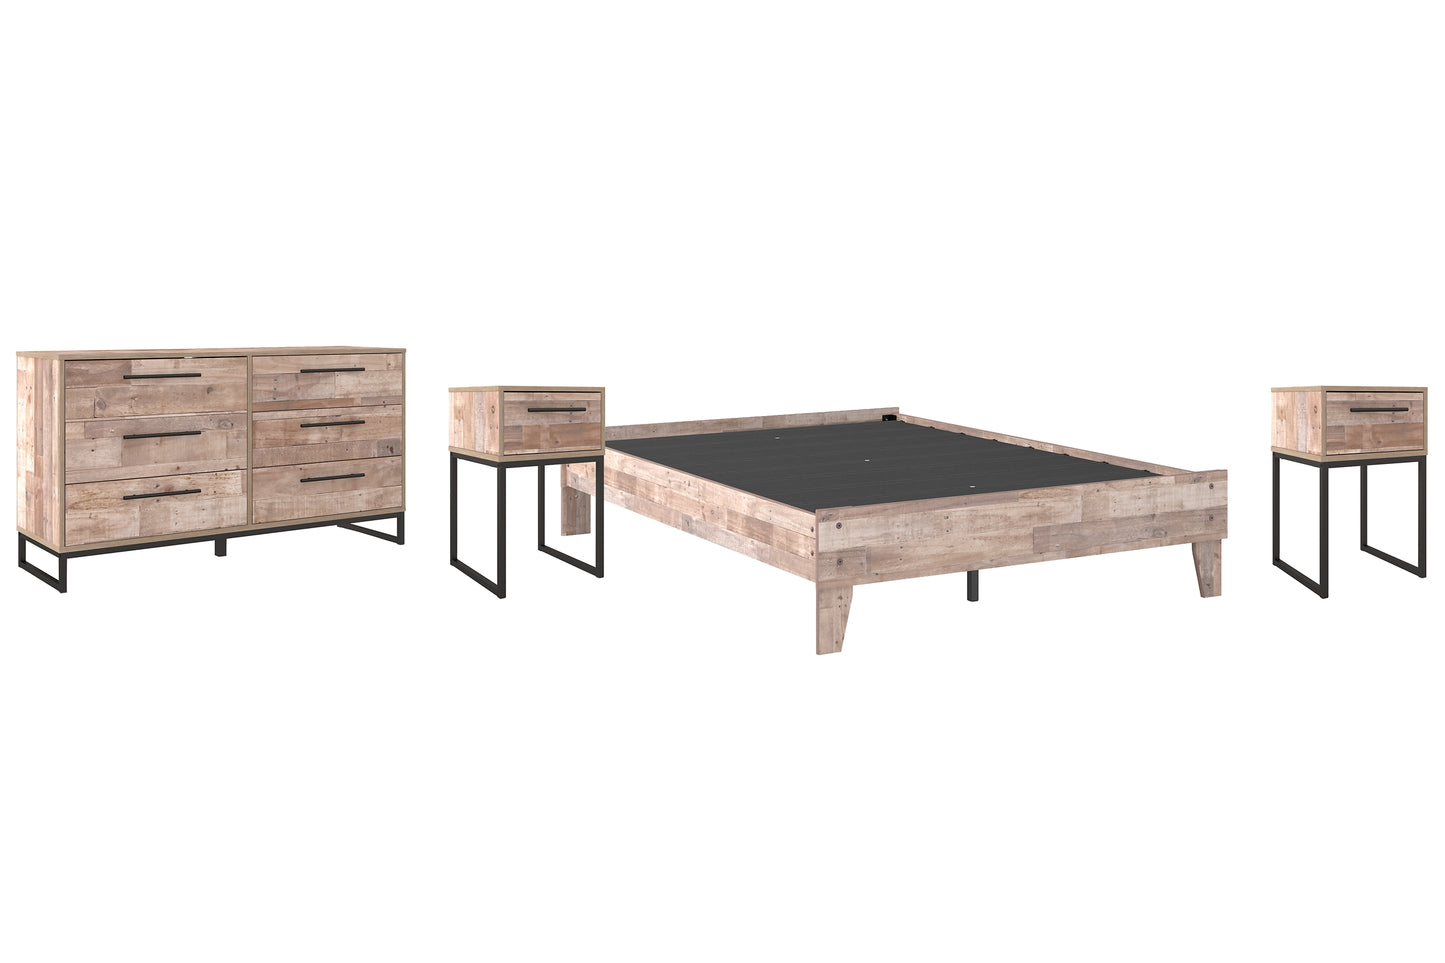 Neilsville Full Platform Bed with Dresser and 2 Nightstands